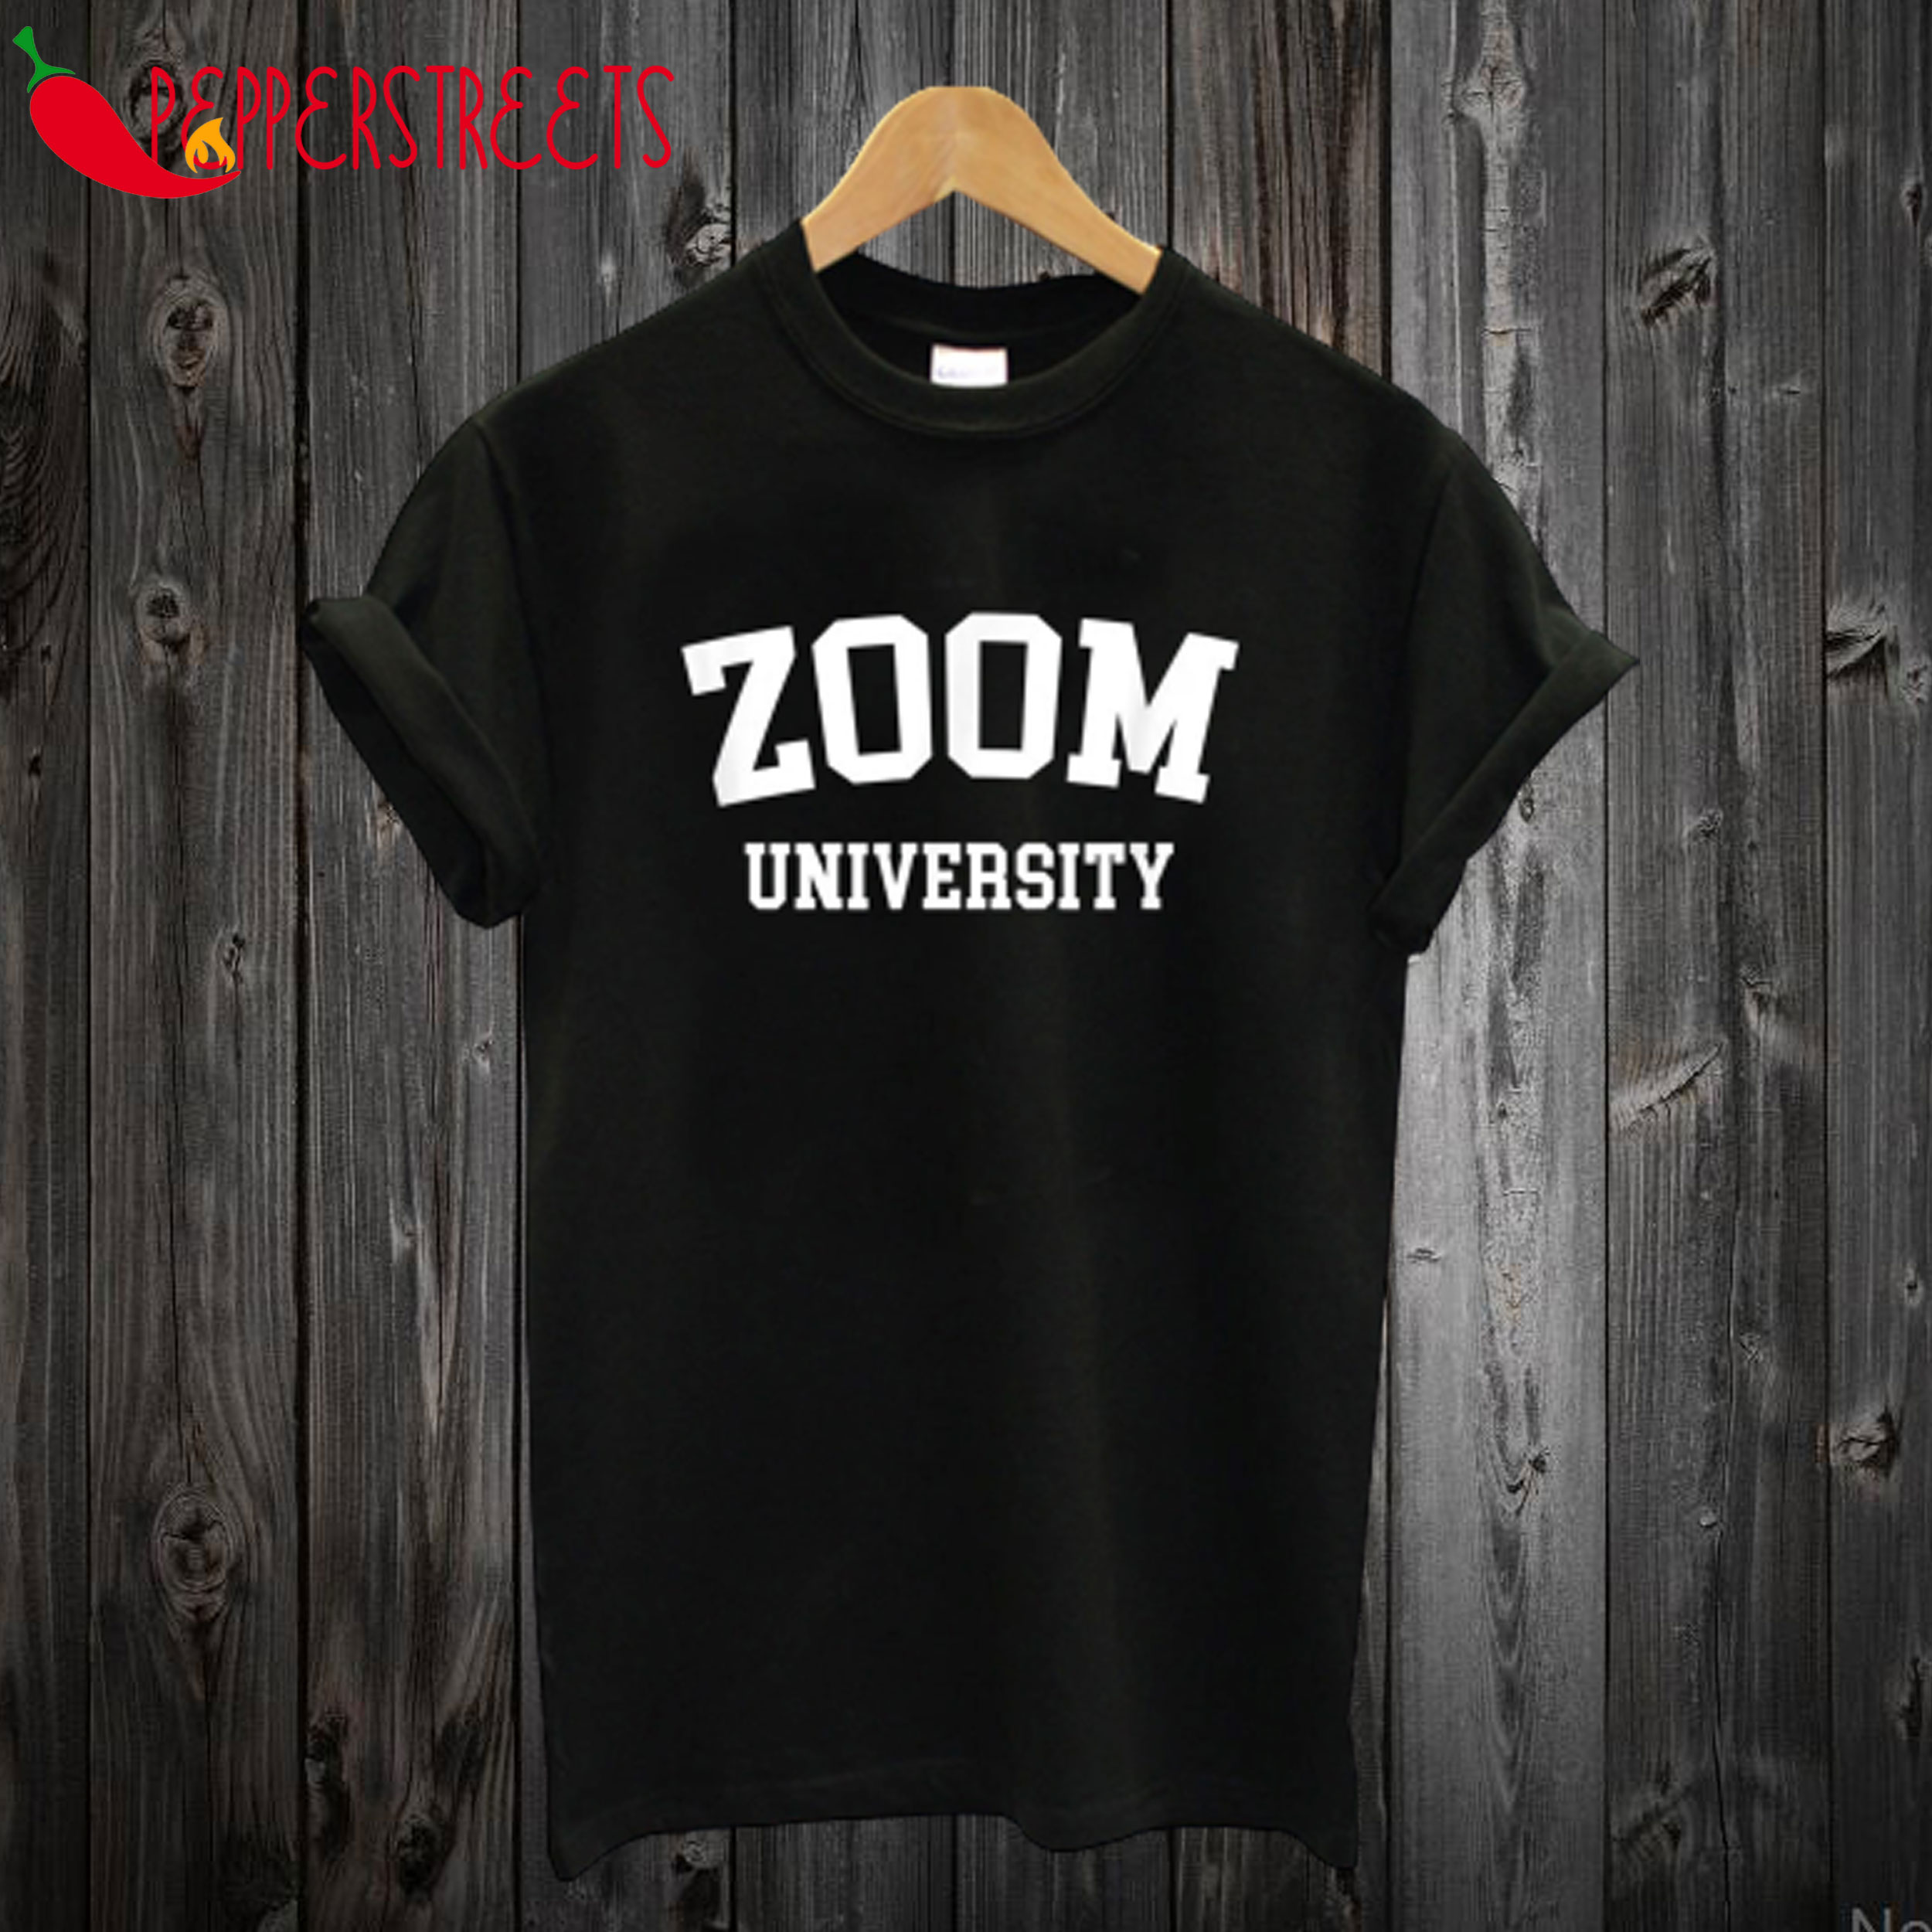 Zoom University T-Shirt